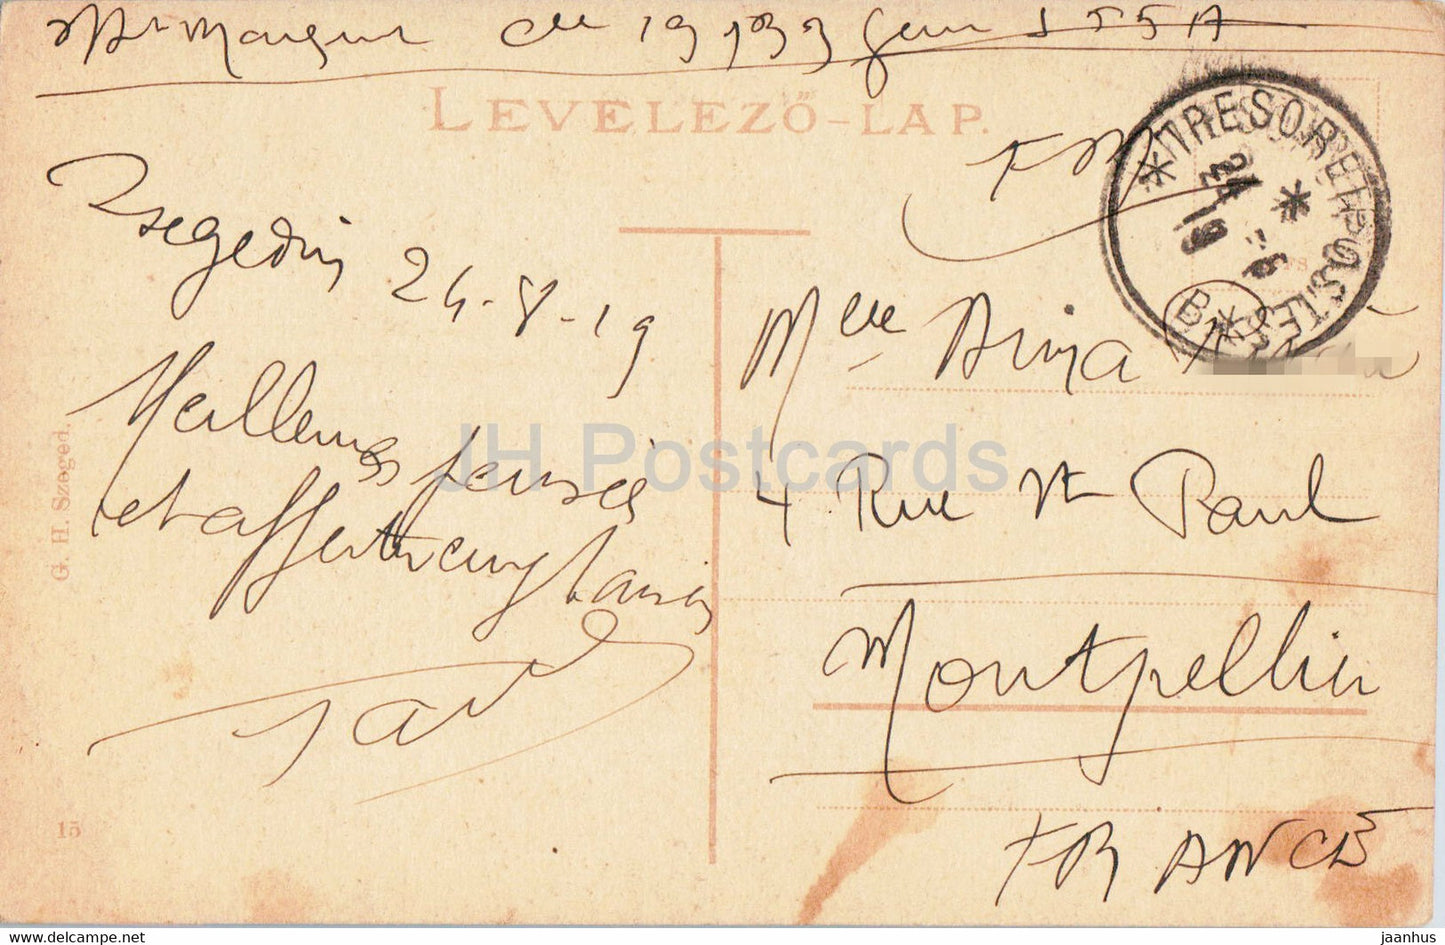 Szeged - Varosi szinhaz - Theater - alte Postkarte - 1919 - Ungarn - gebraucht